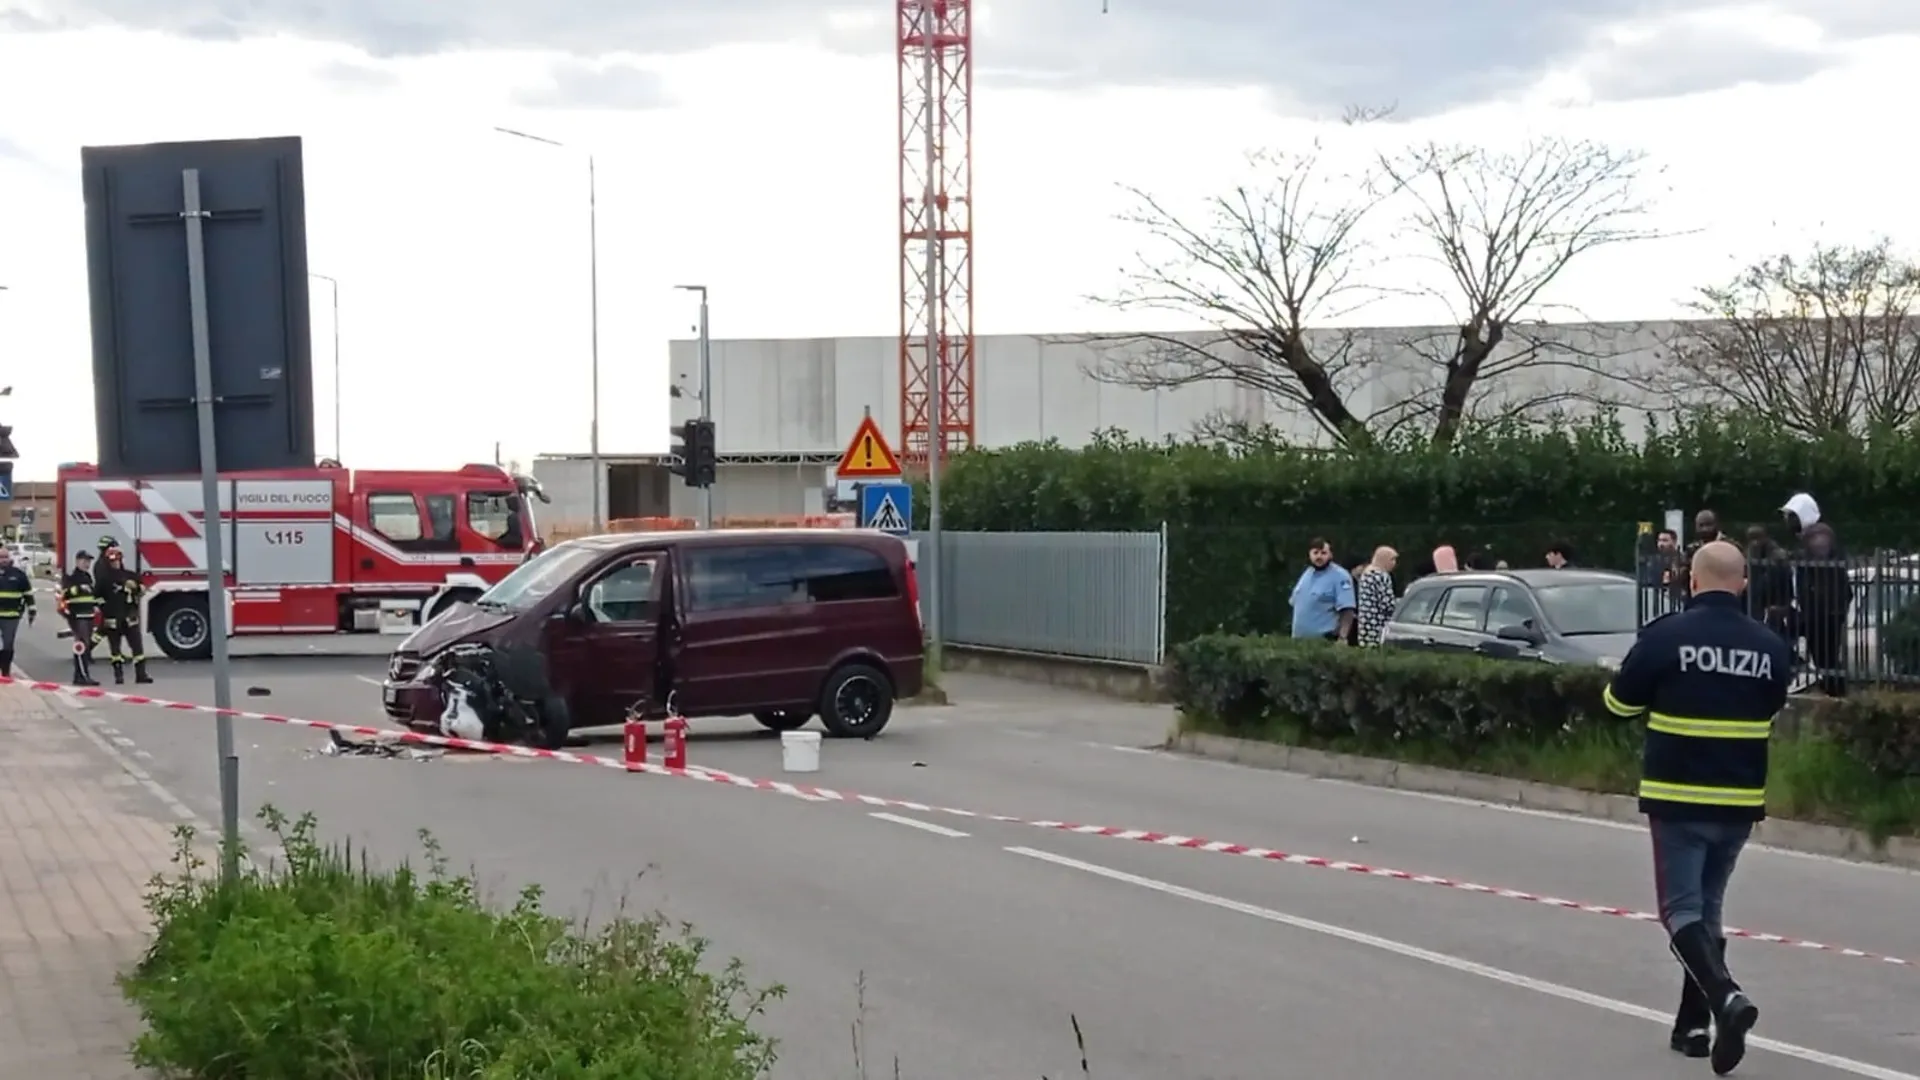  ‣ adn24 bonate sotto (bg) | tragico scontro moto-minivan: morto 35enne, grave passeggera